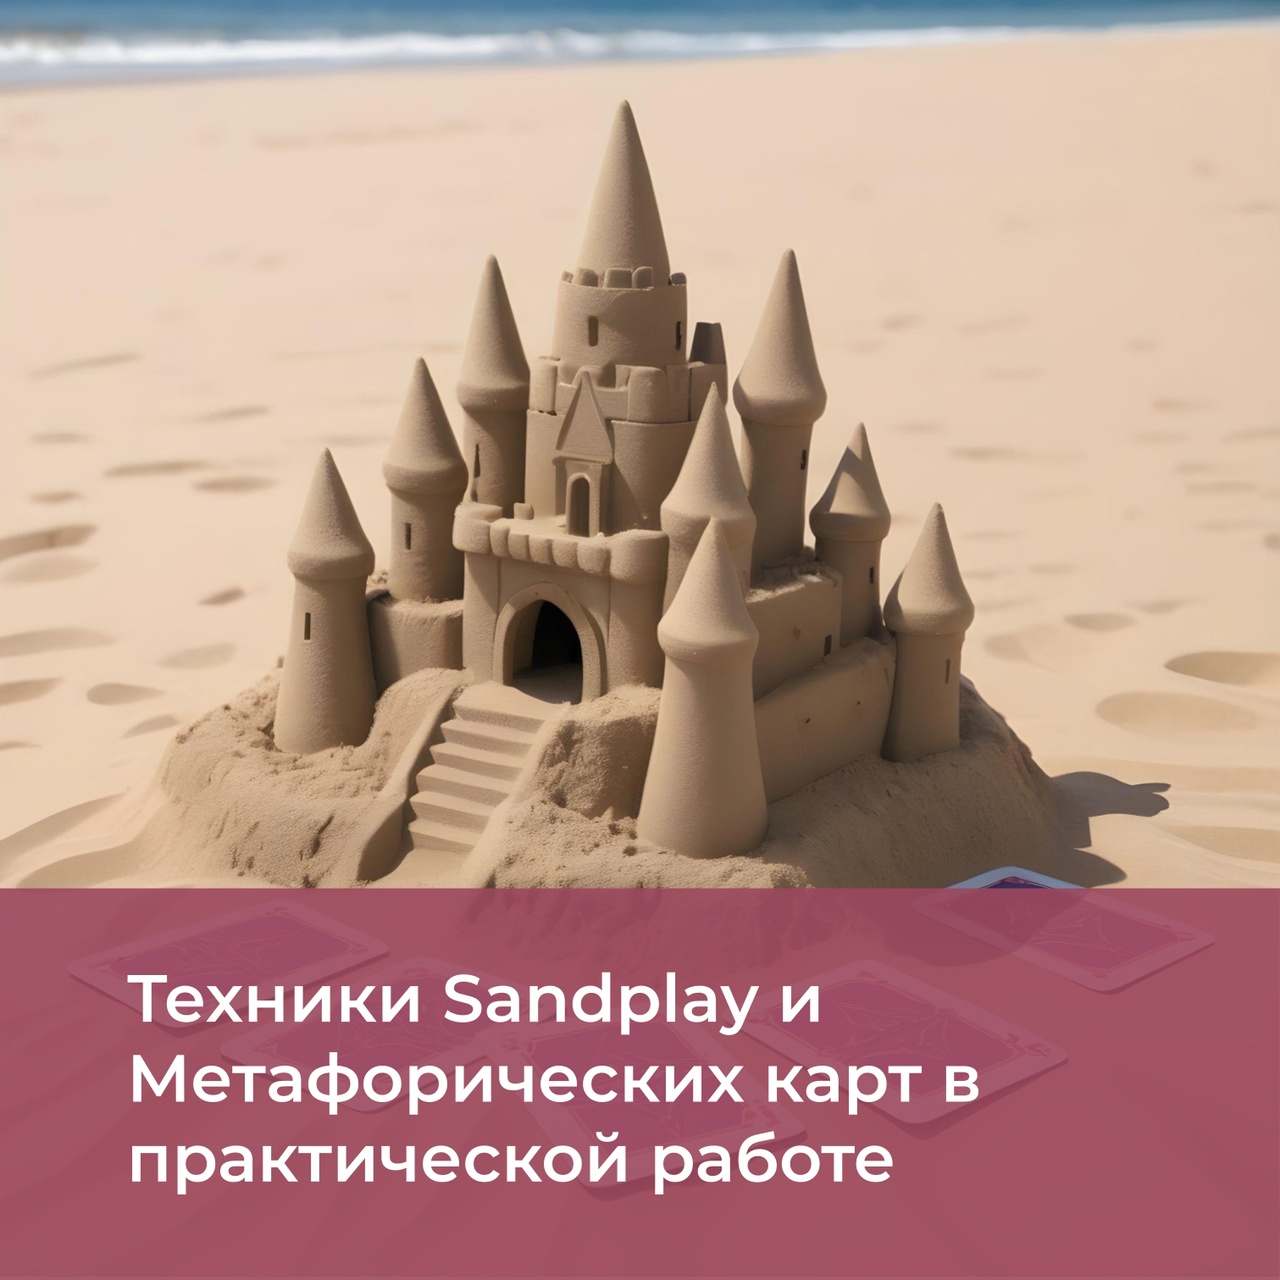  Sandplay       